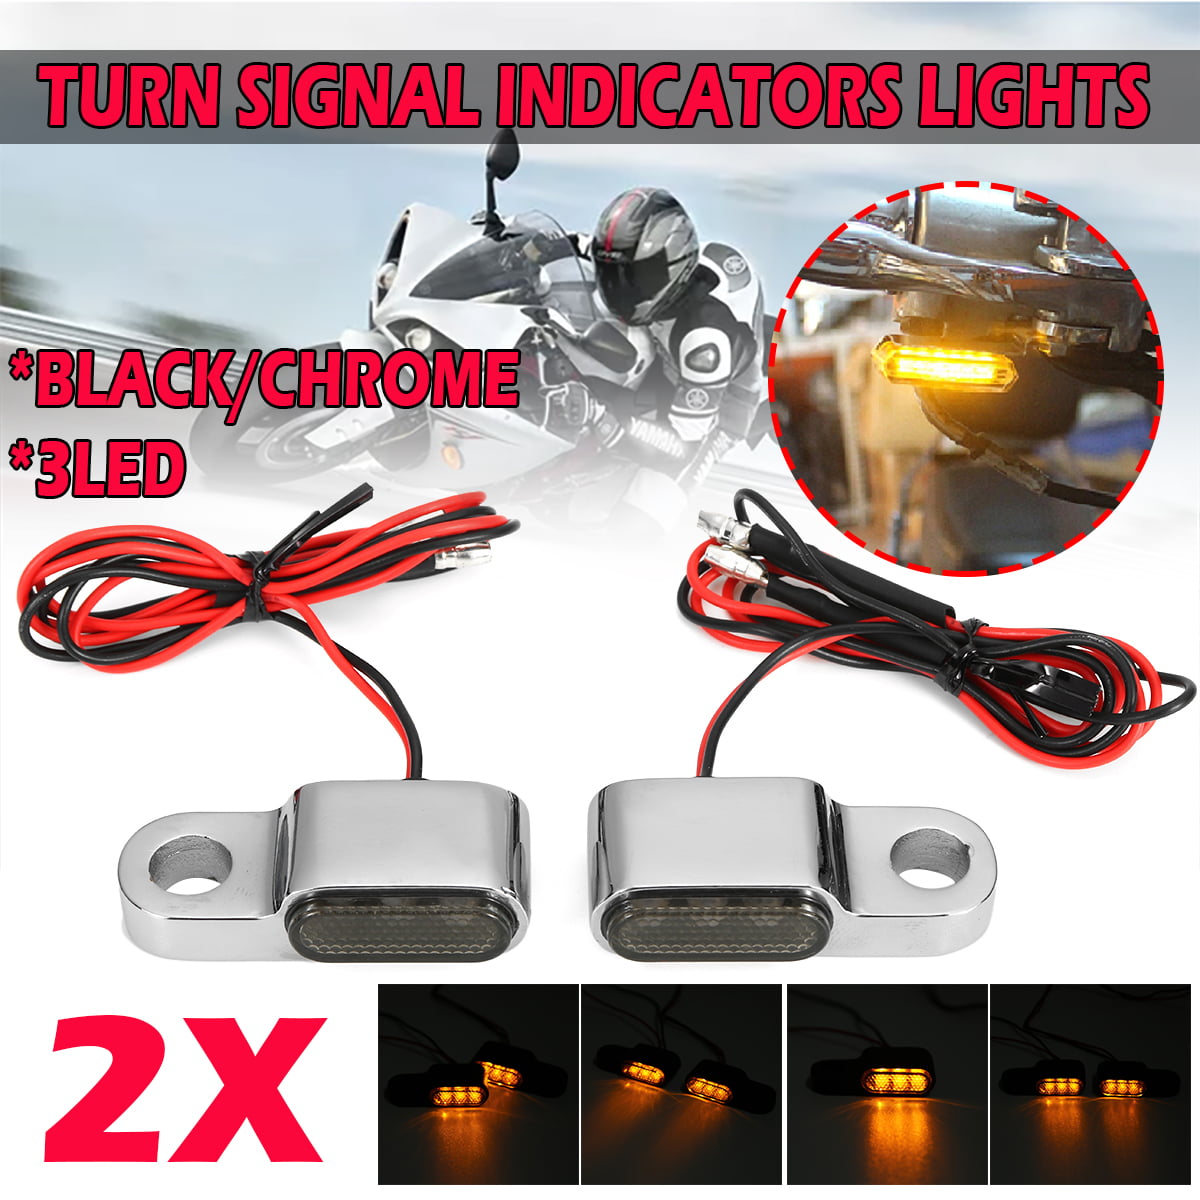 2x Universal Motorcycle Turn Signal Indicators Black with Smoke Lens Mini Stalk Arrow 28 LED Blinkers Lights Blub Amber Yellow